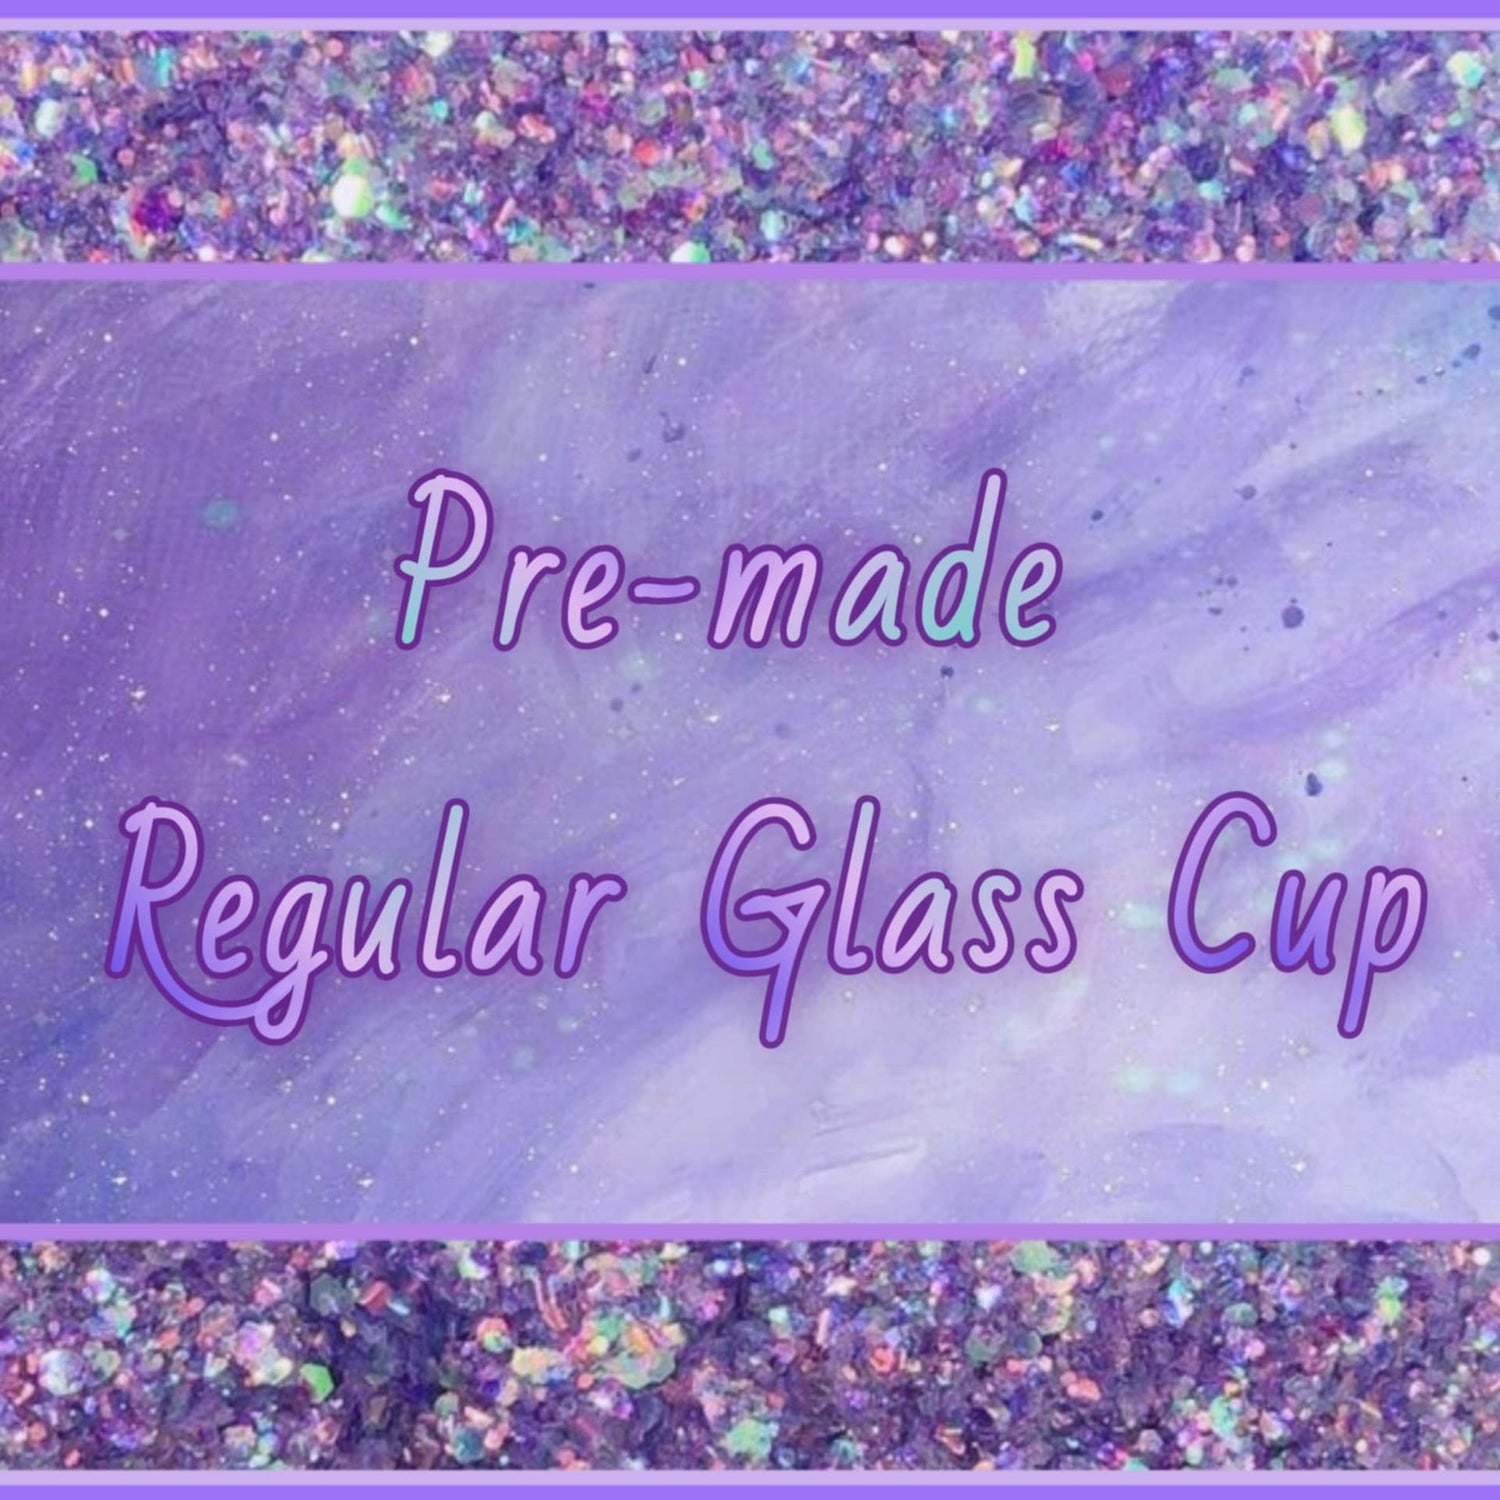 PRE-MADE Regular Glass Cups